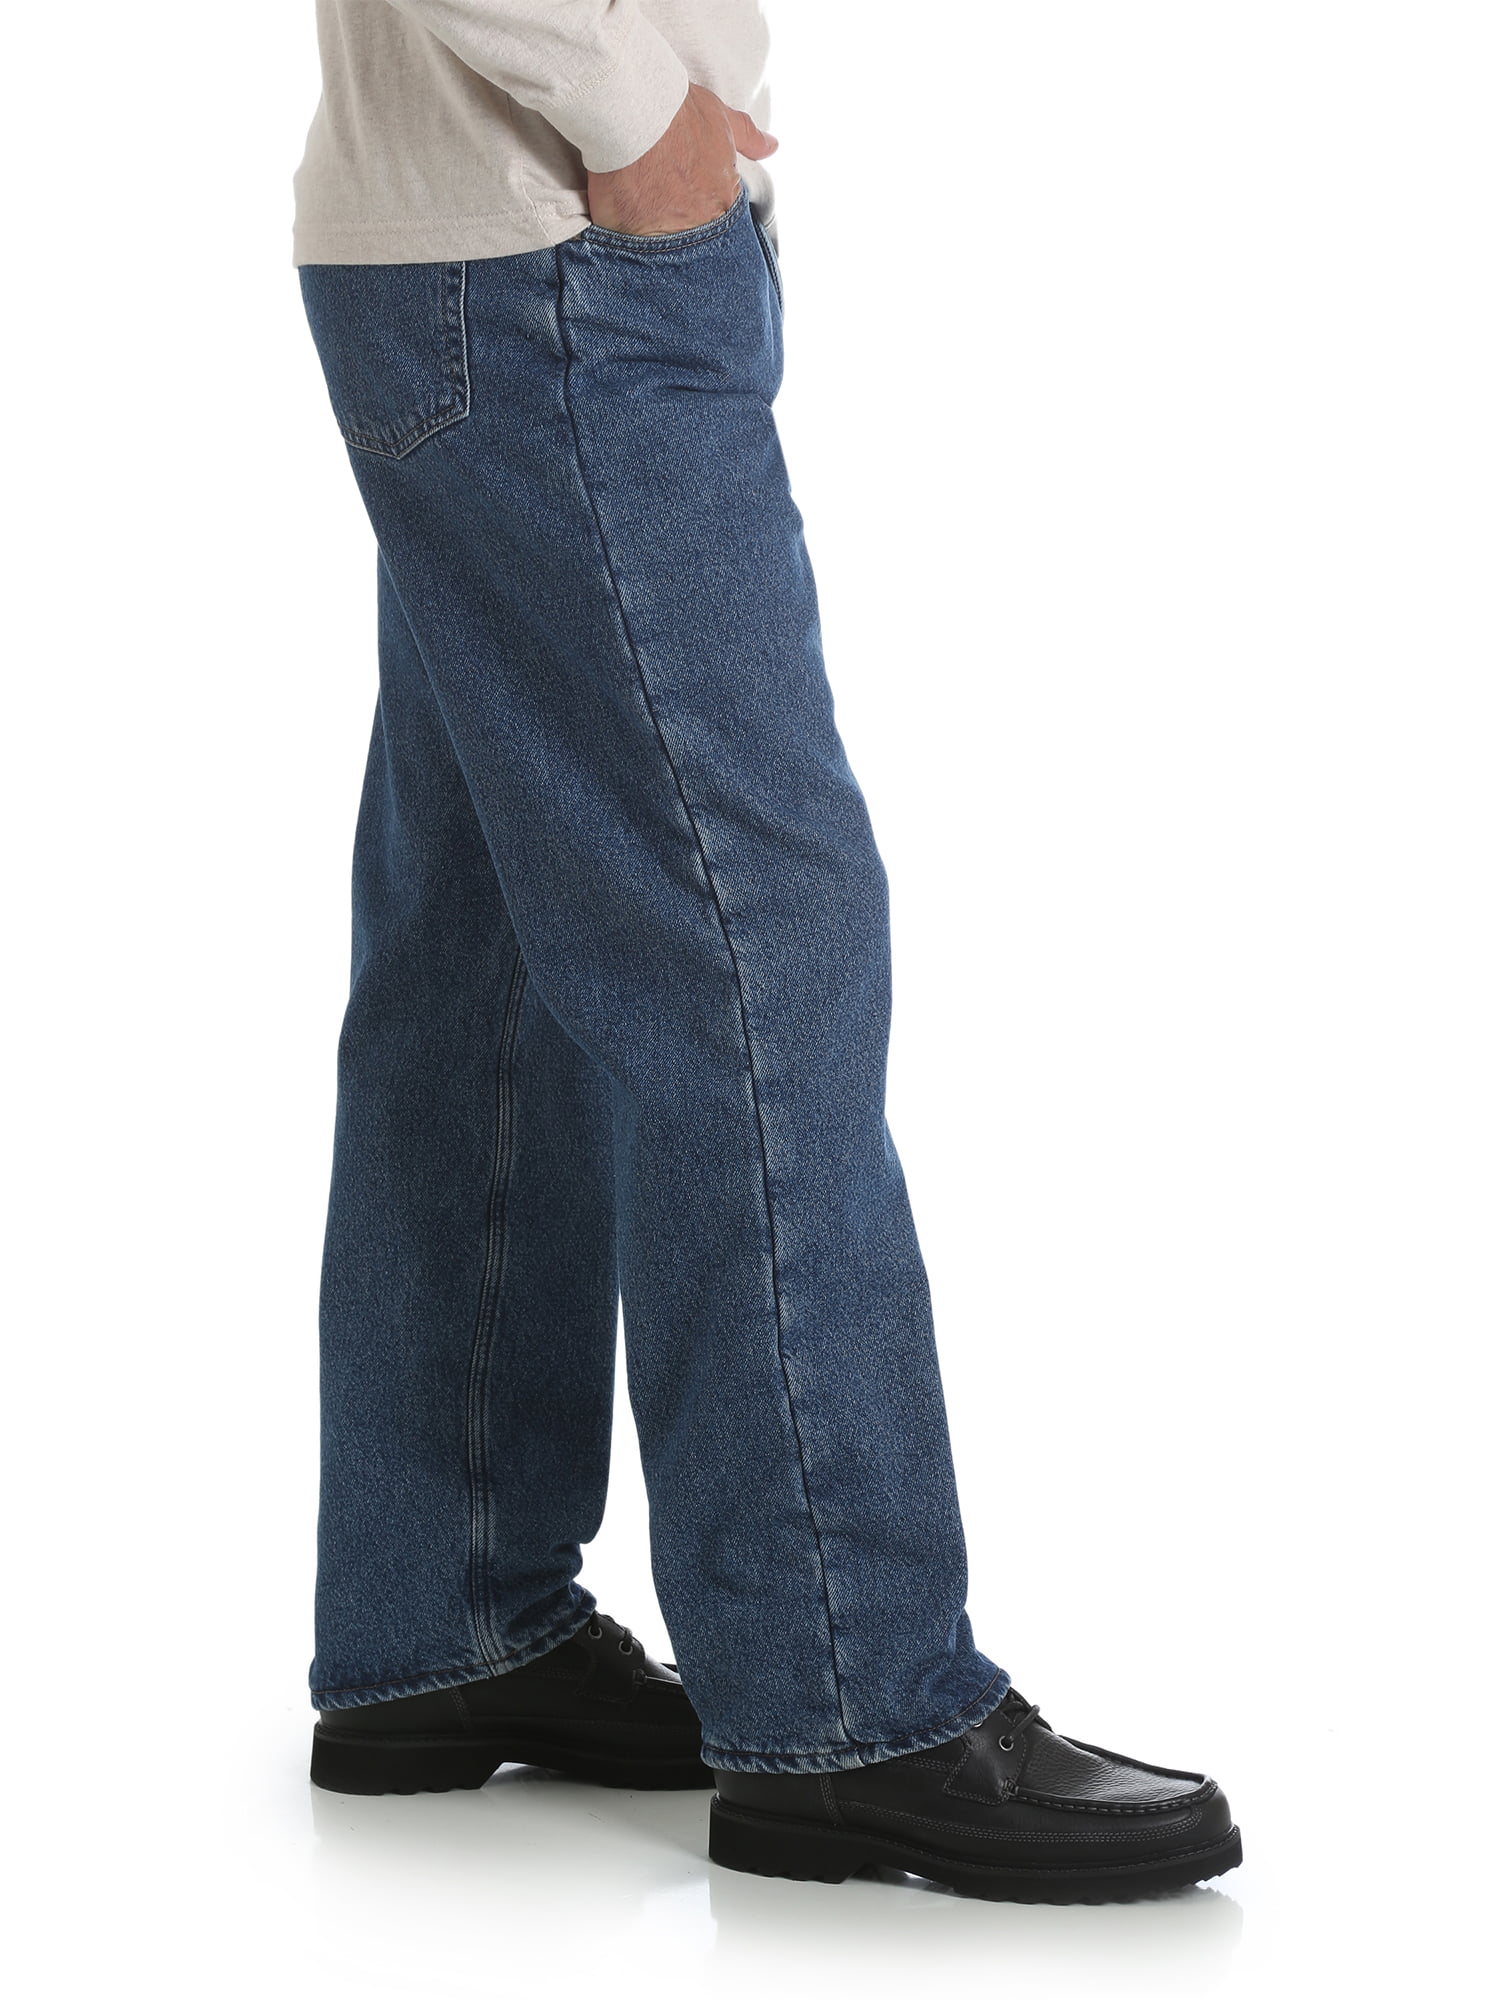 mens lined jeans walmart